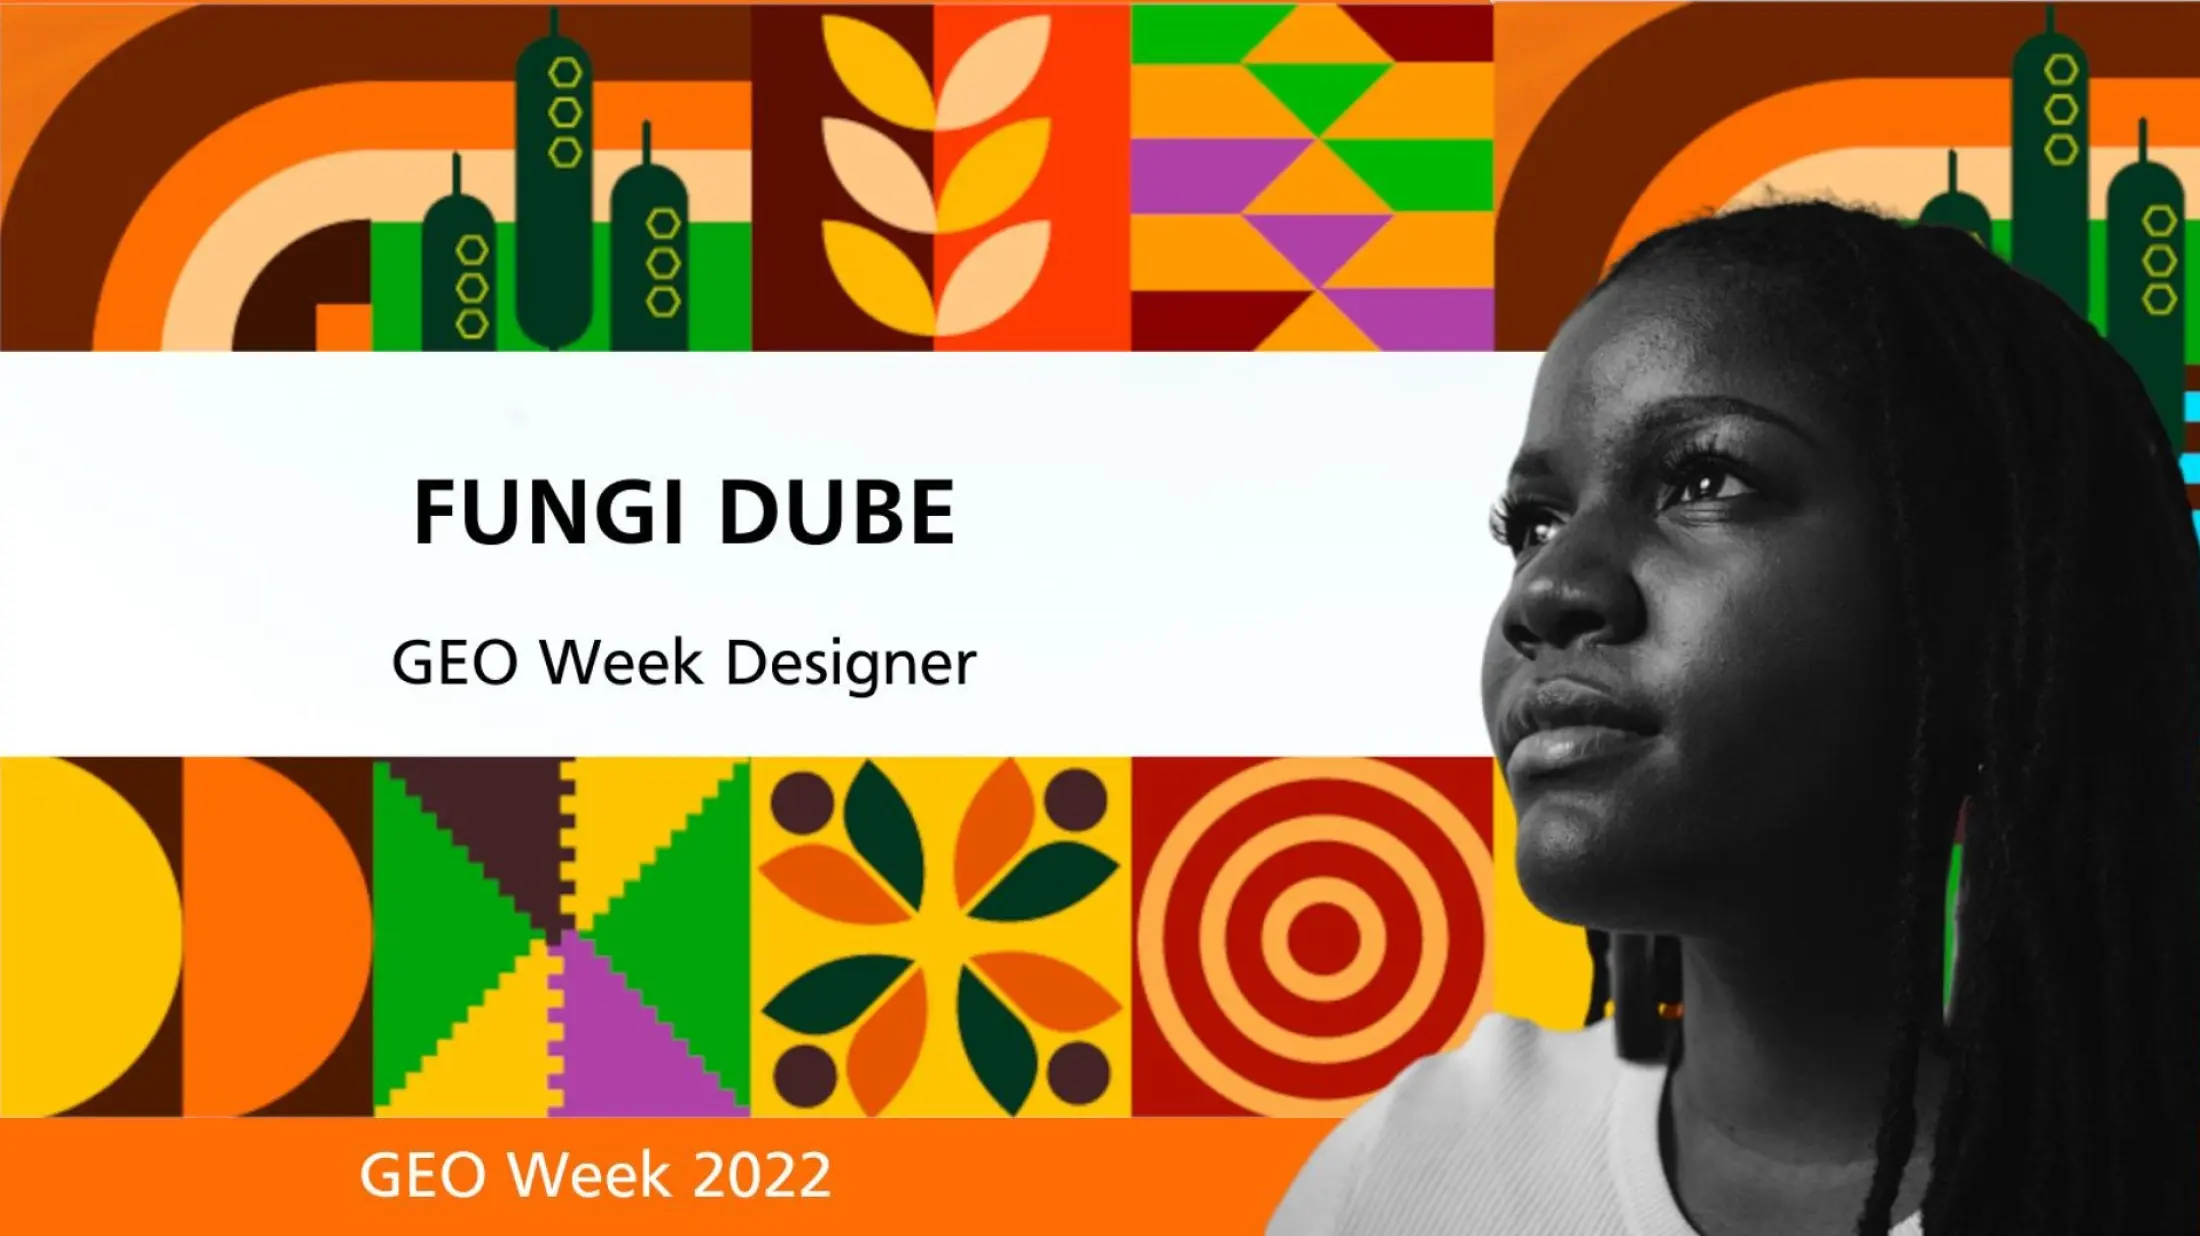 Meet Fungi Dube, GEO Week designer